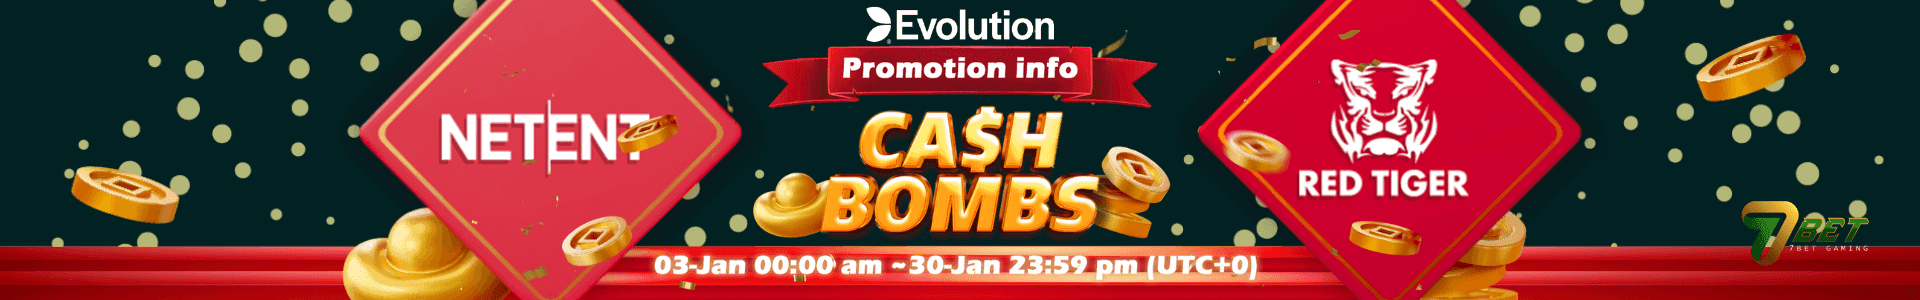 Evolution gaming cash bombs